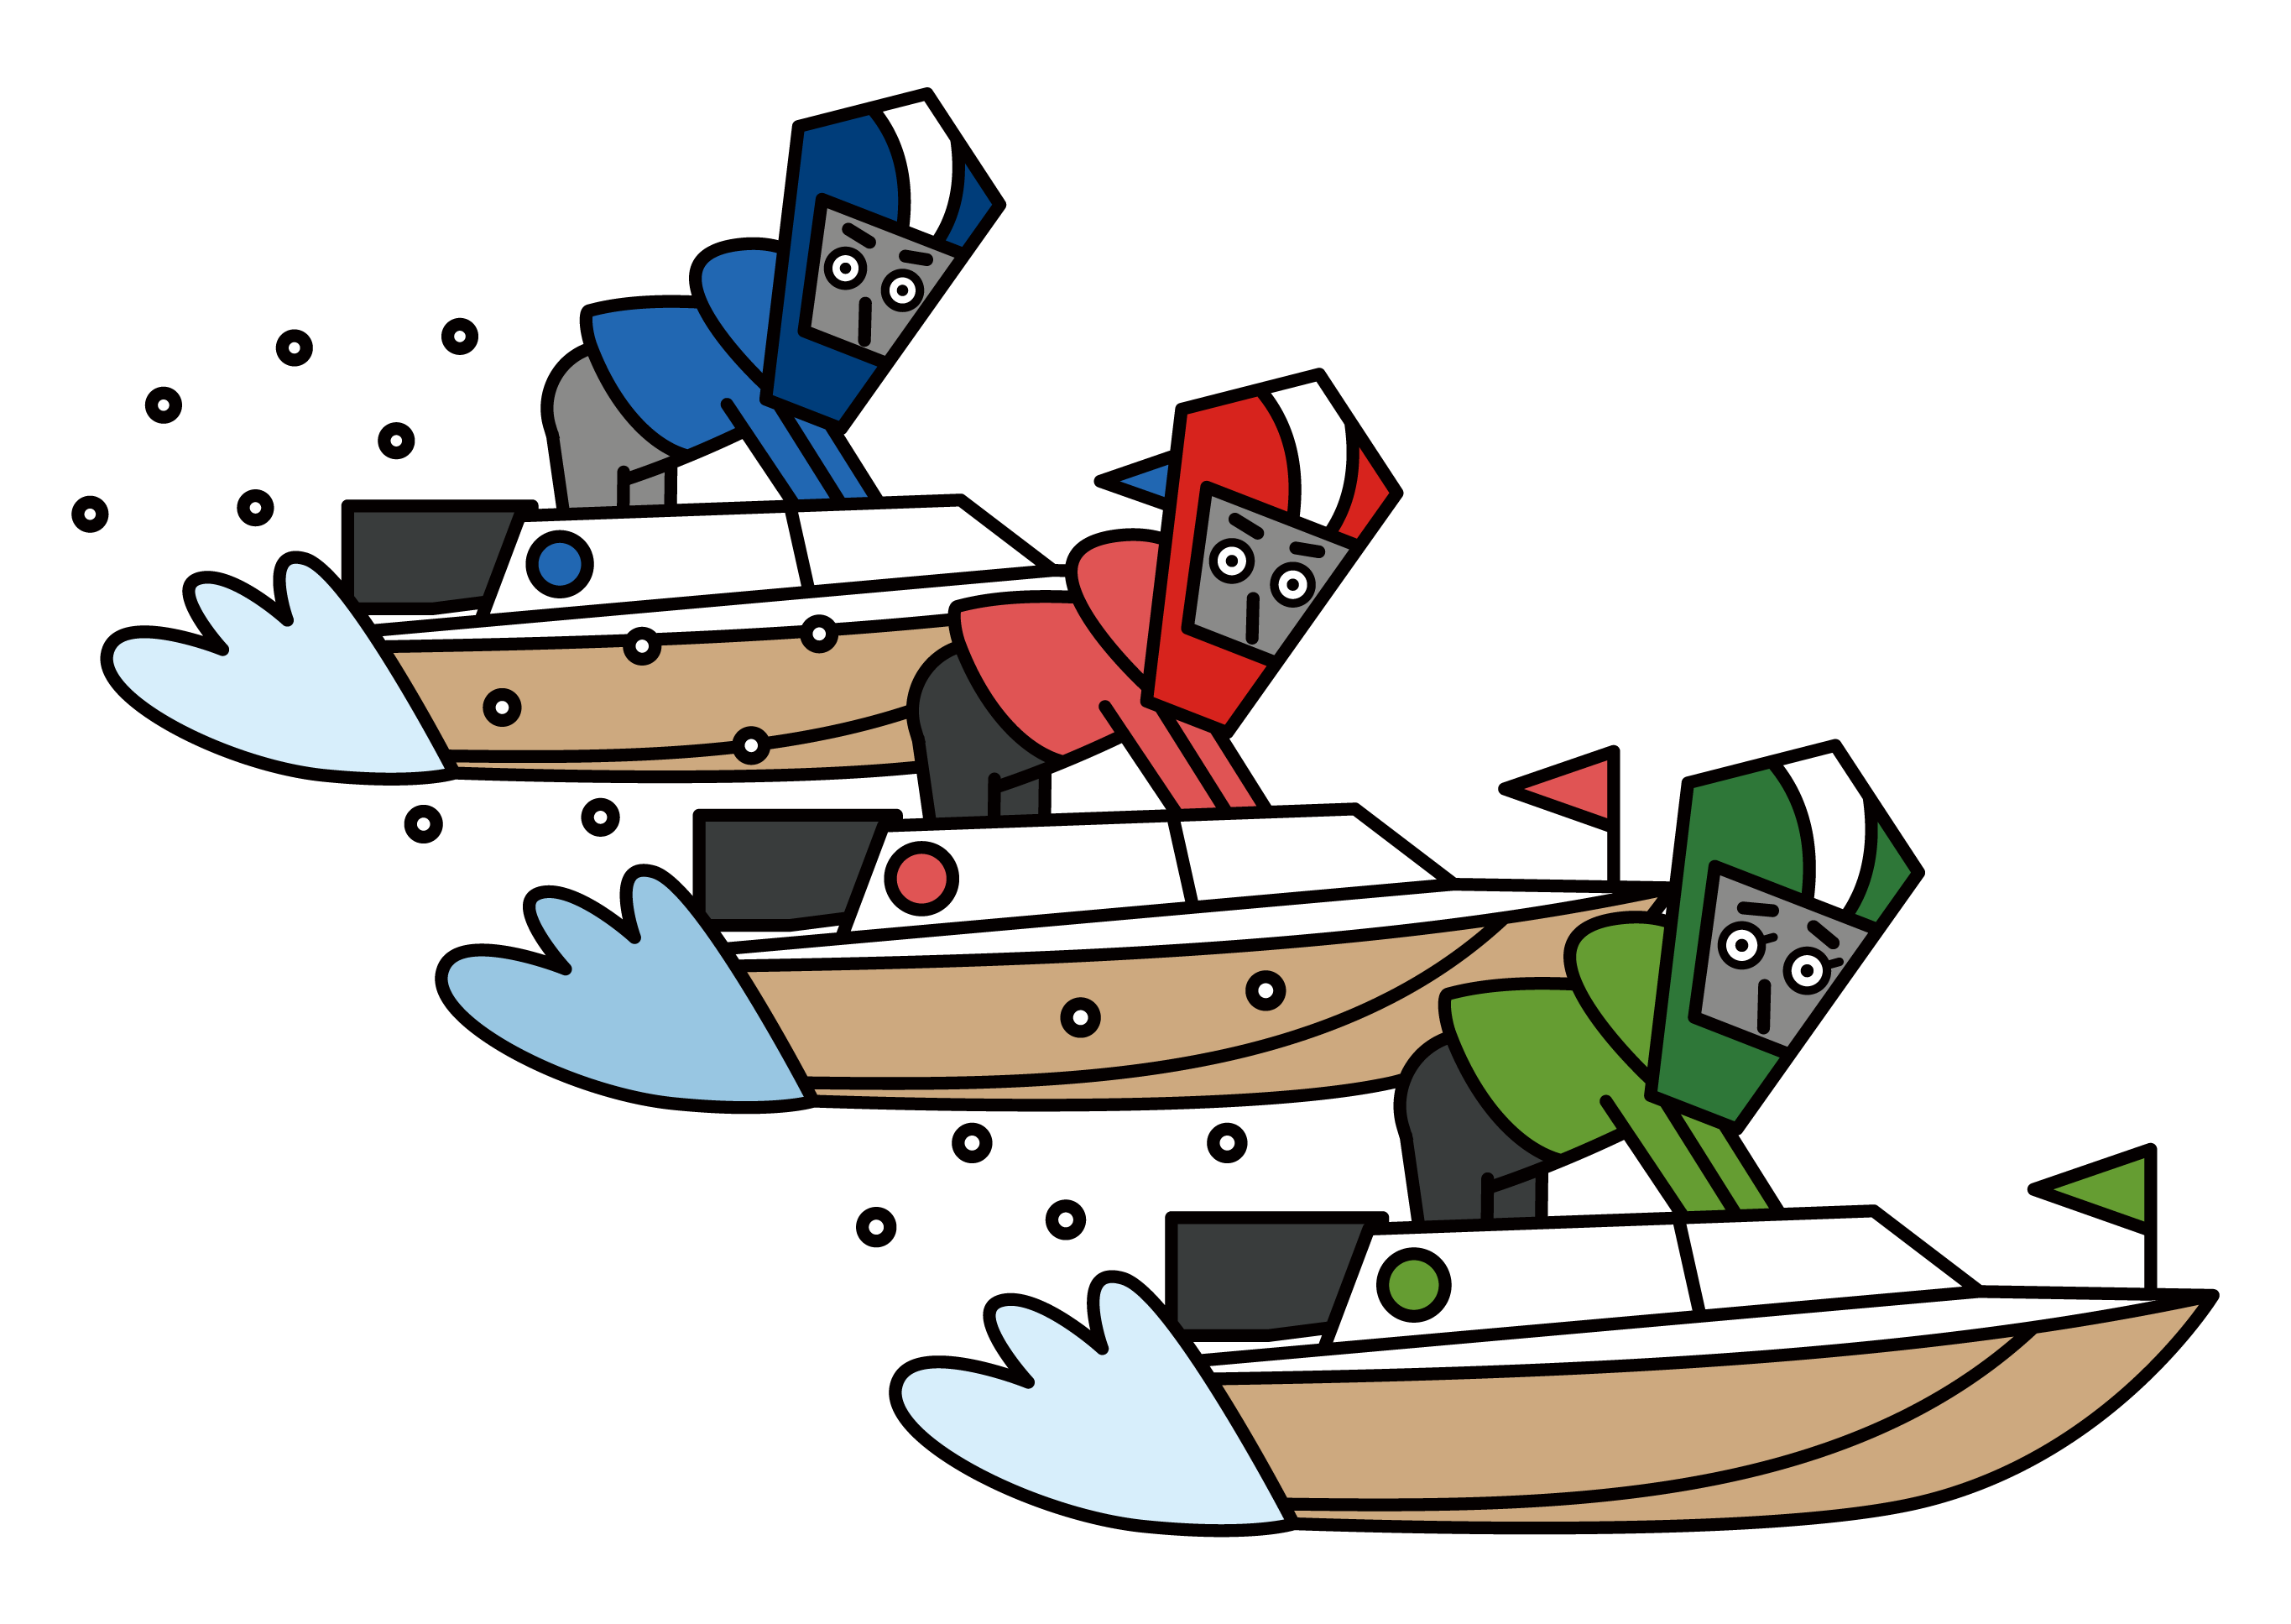 Boat race boat illustration